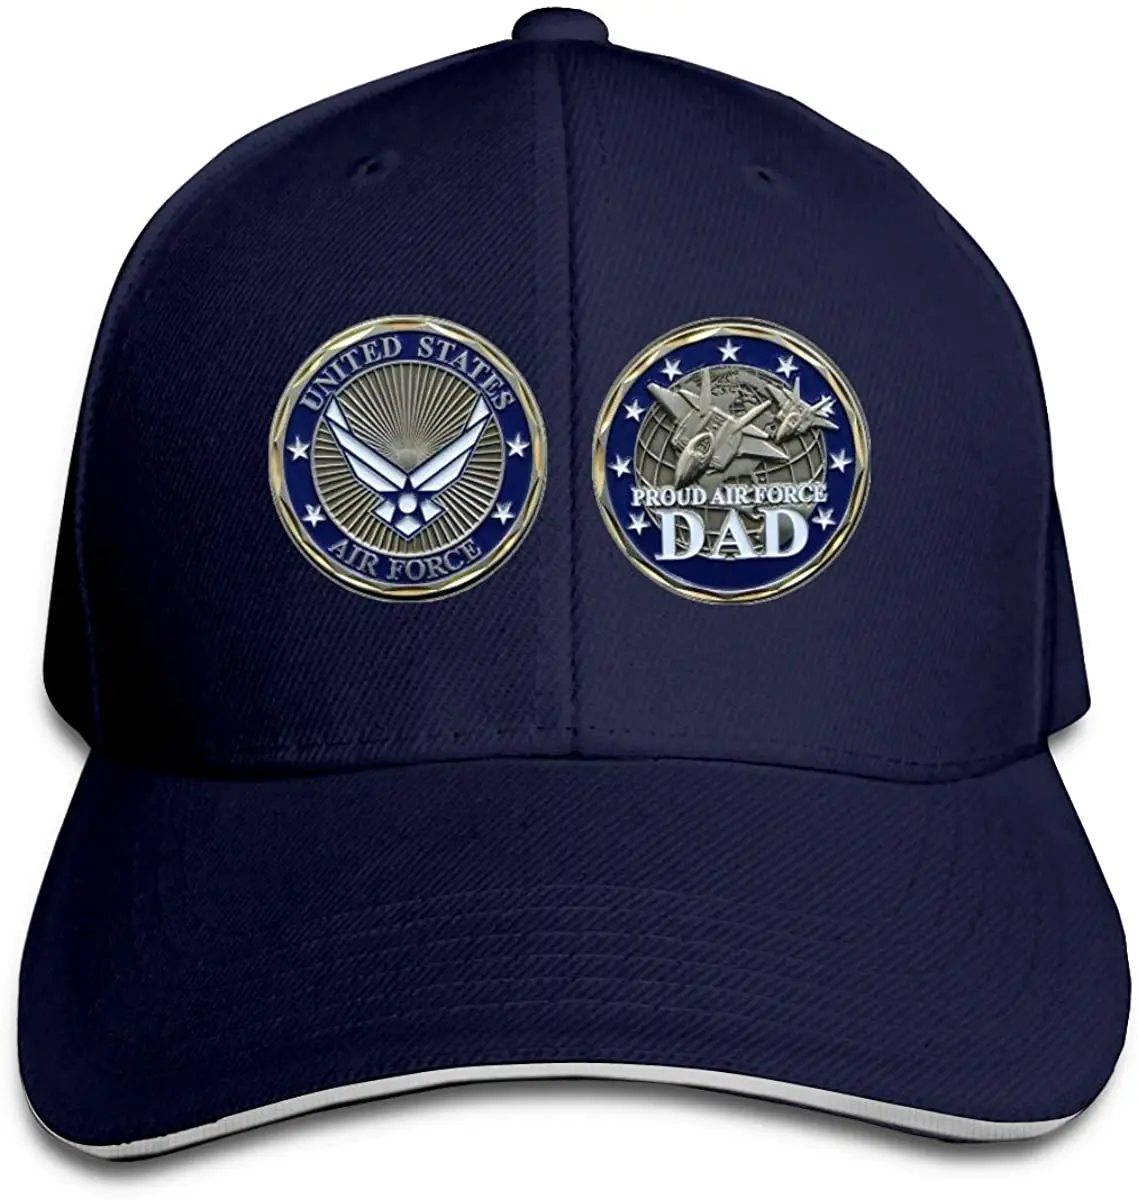 

Us Air Force Proud Air Force Baseball Caps Sandwich Caps